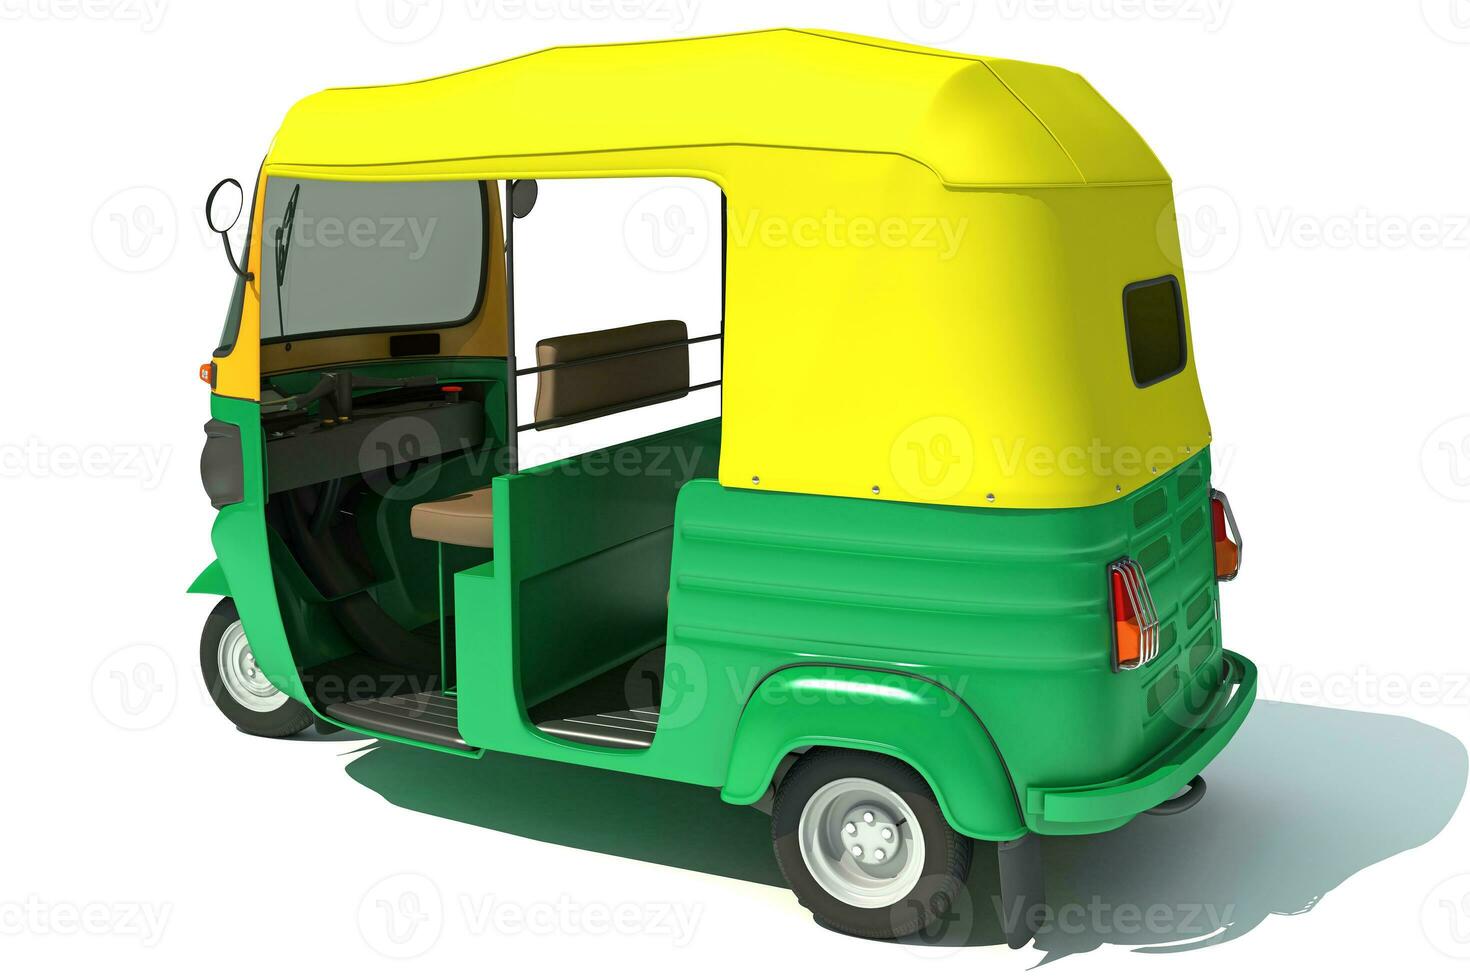 Auto Rickshaw Bajaj TukTuk 3D rendering on white background photo